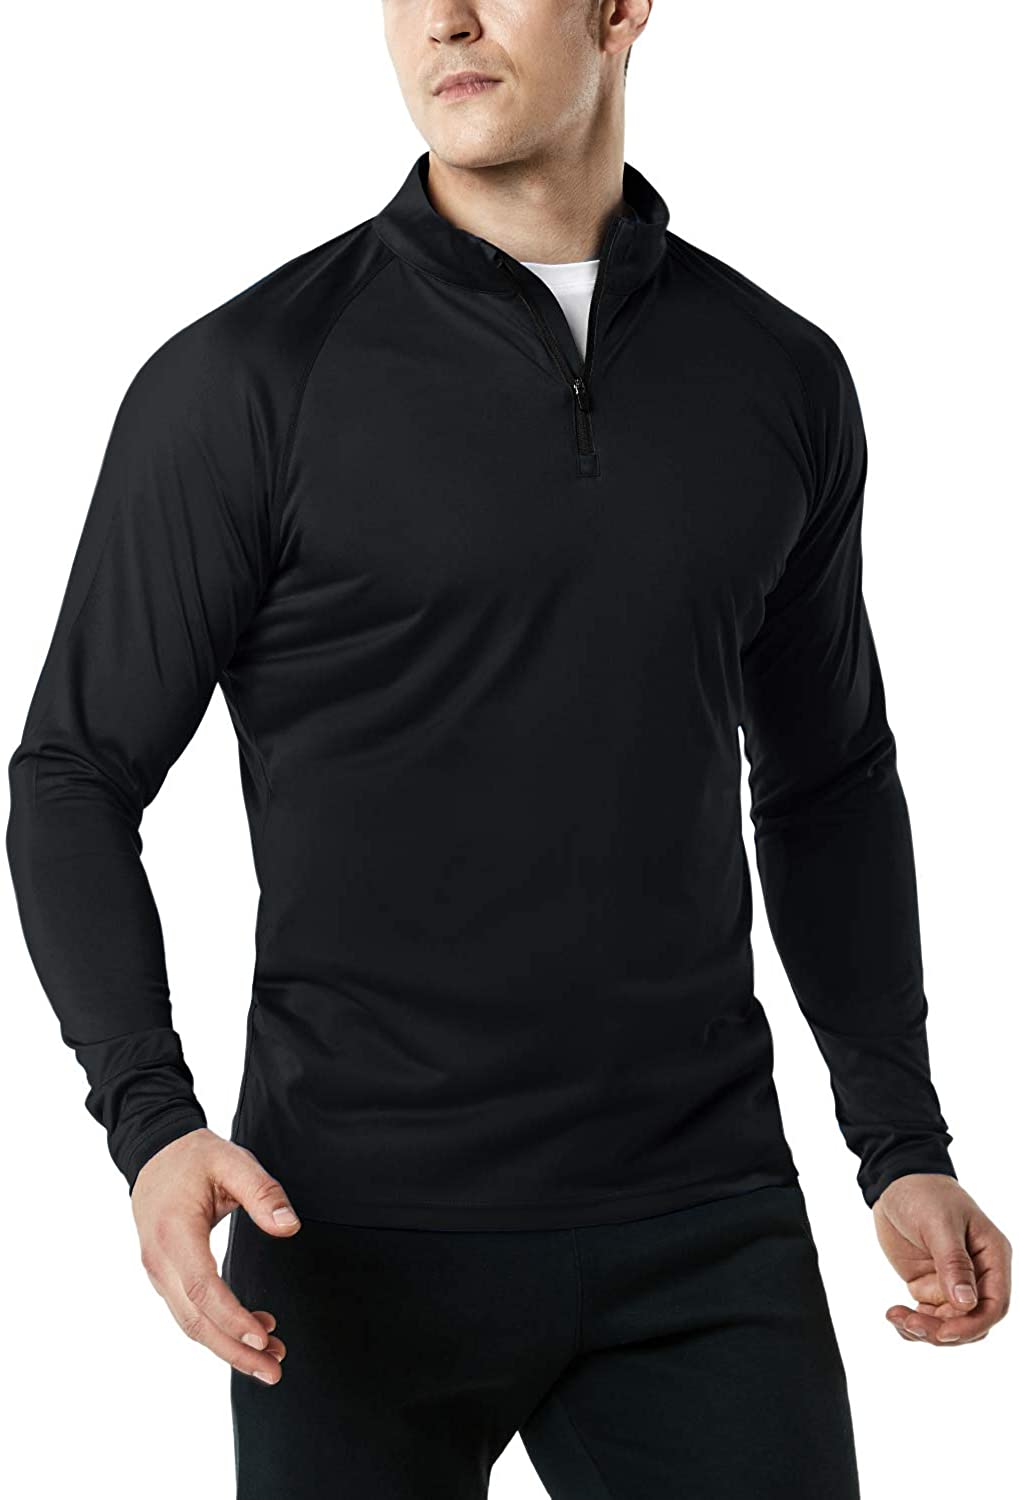 TSLA Mens 1/4 Zip HyperDri Cool Dry Active Sporty Shirt Top 